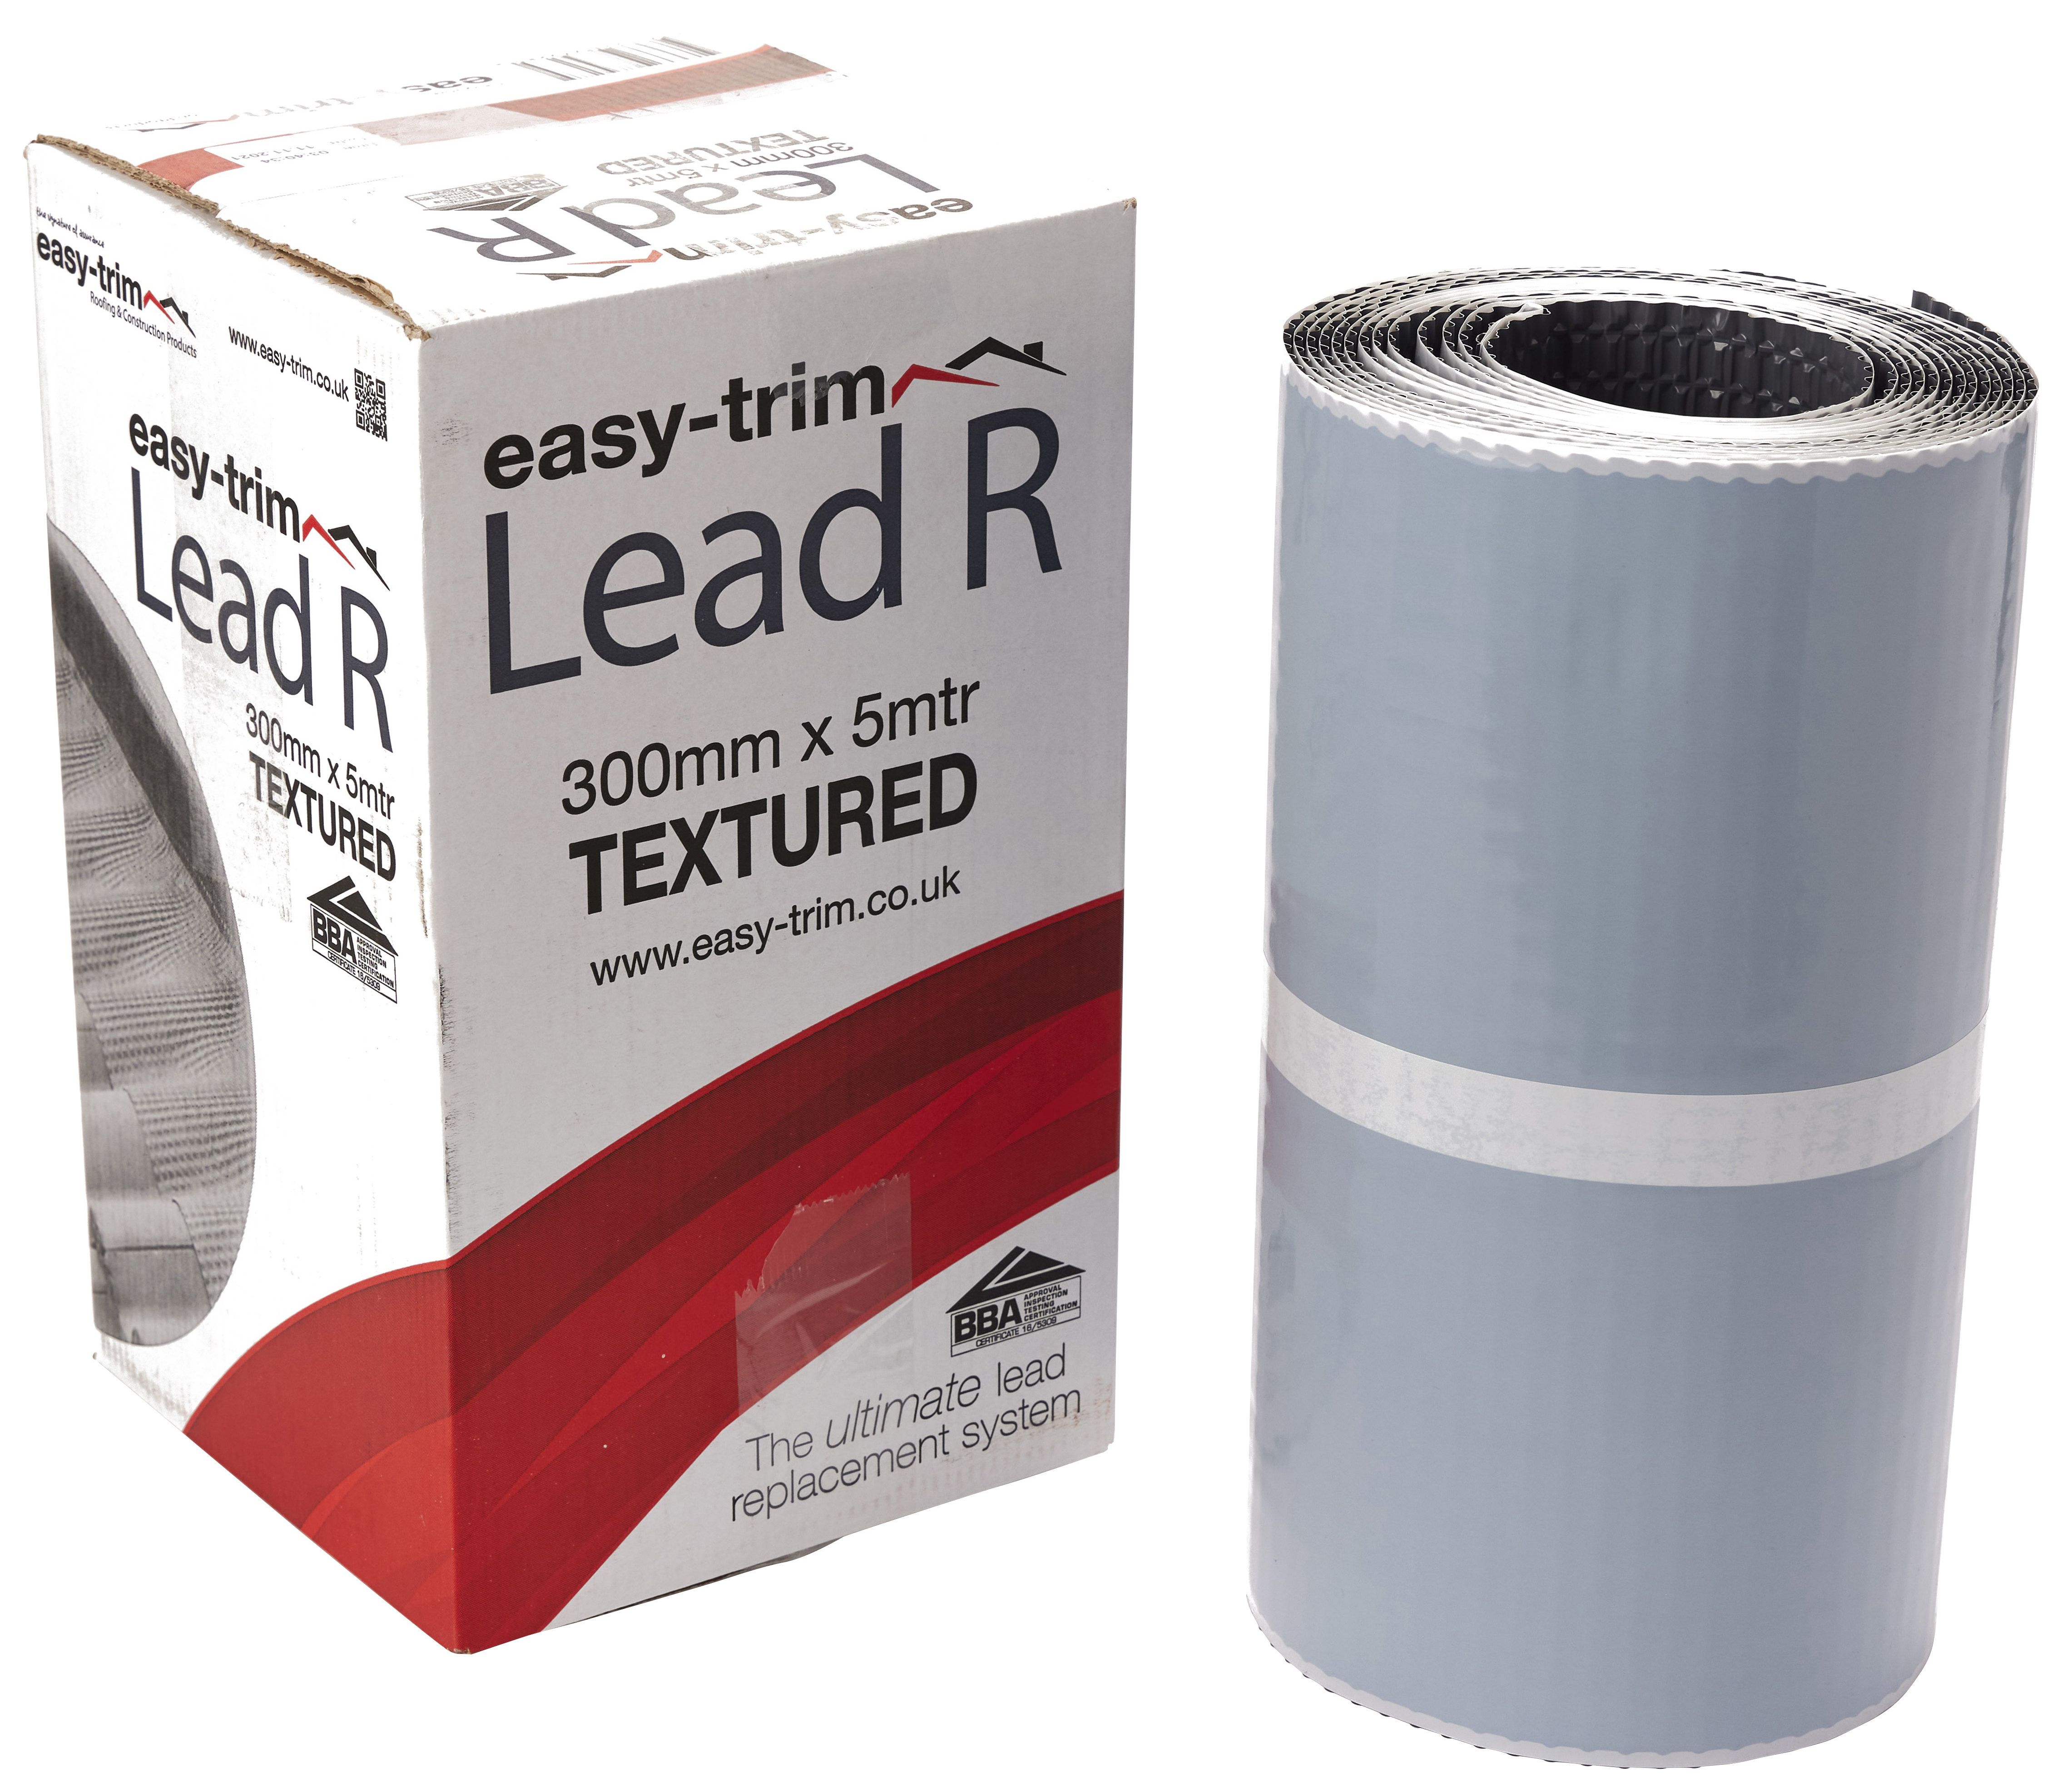 Easy-Trim Lead R Textured 300mm x 5m